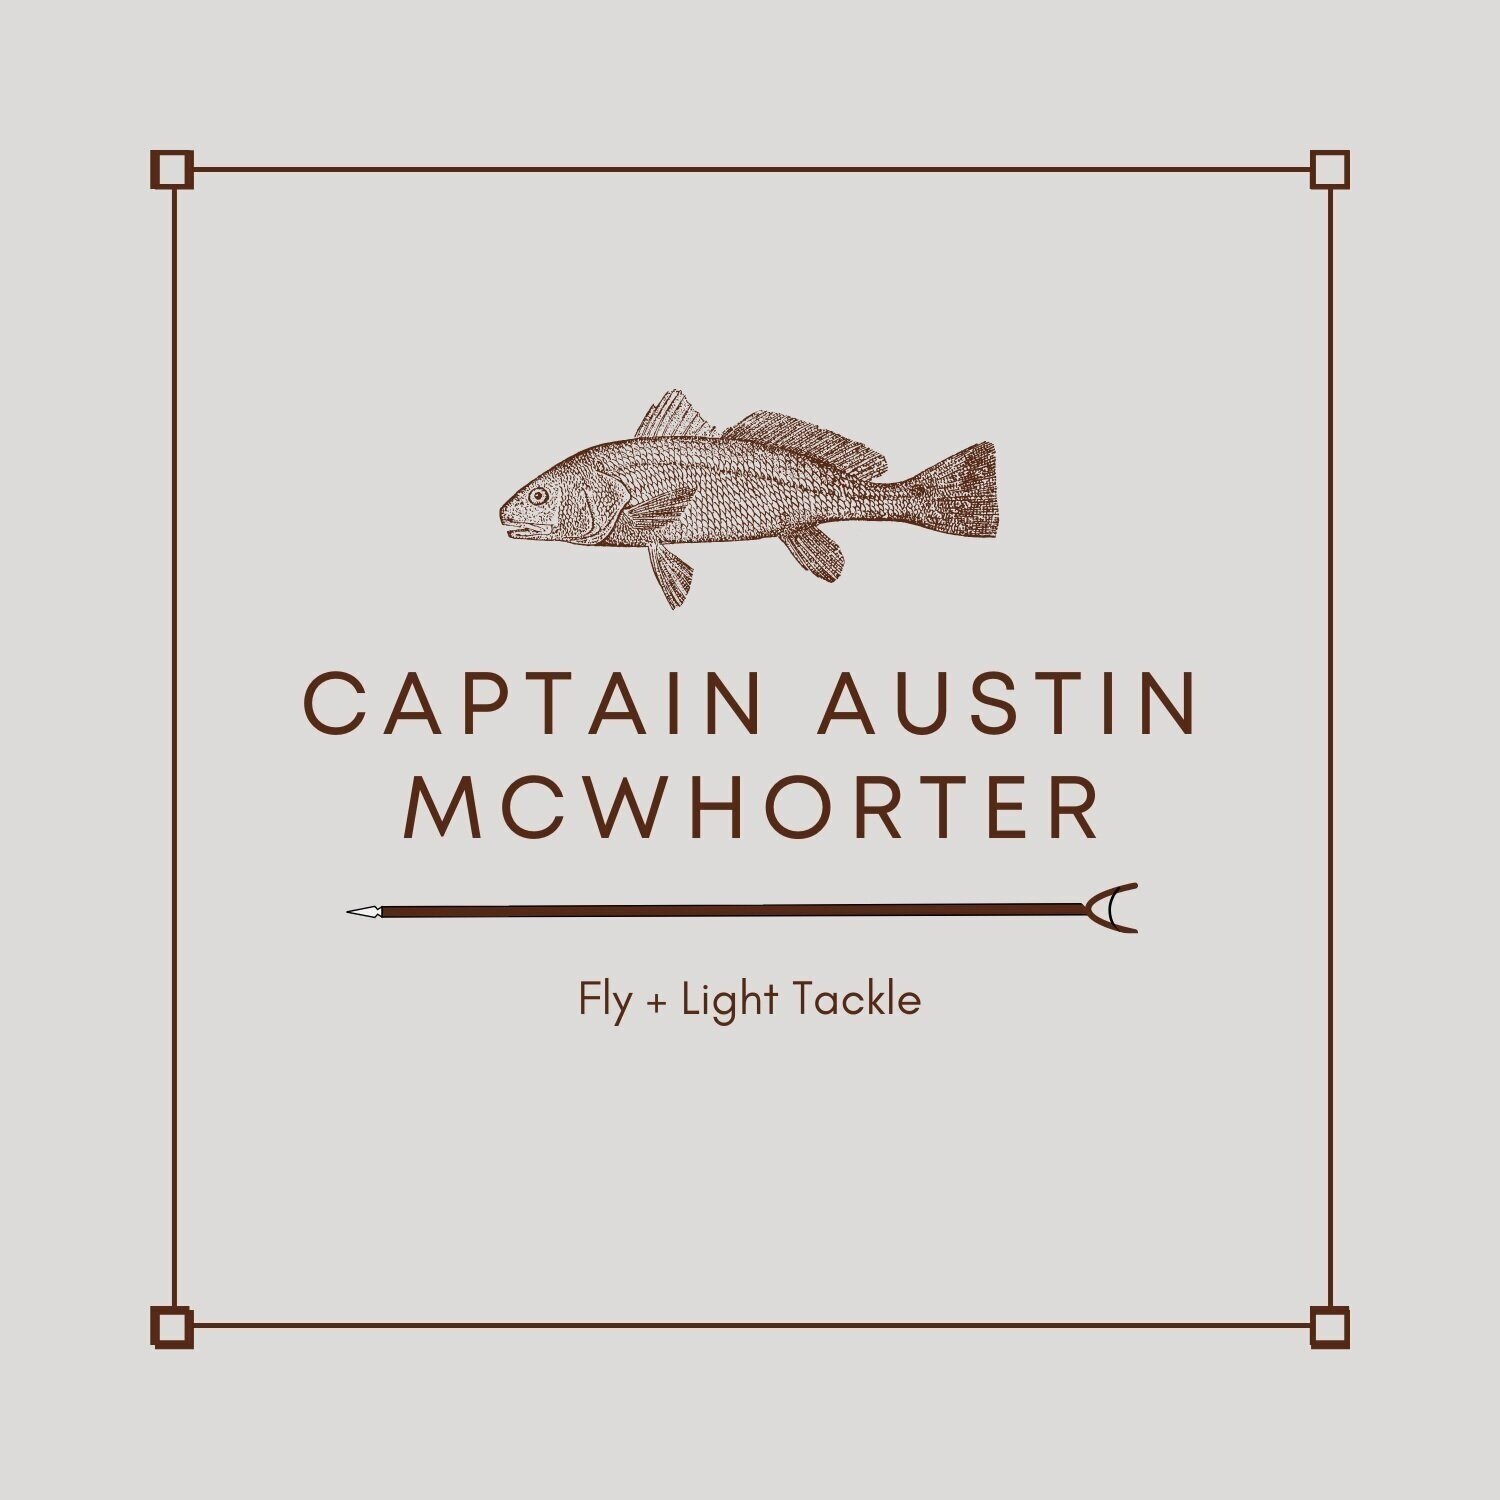 Captain Austin McWhorter